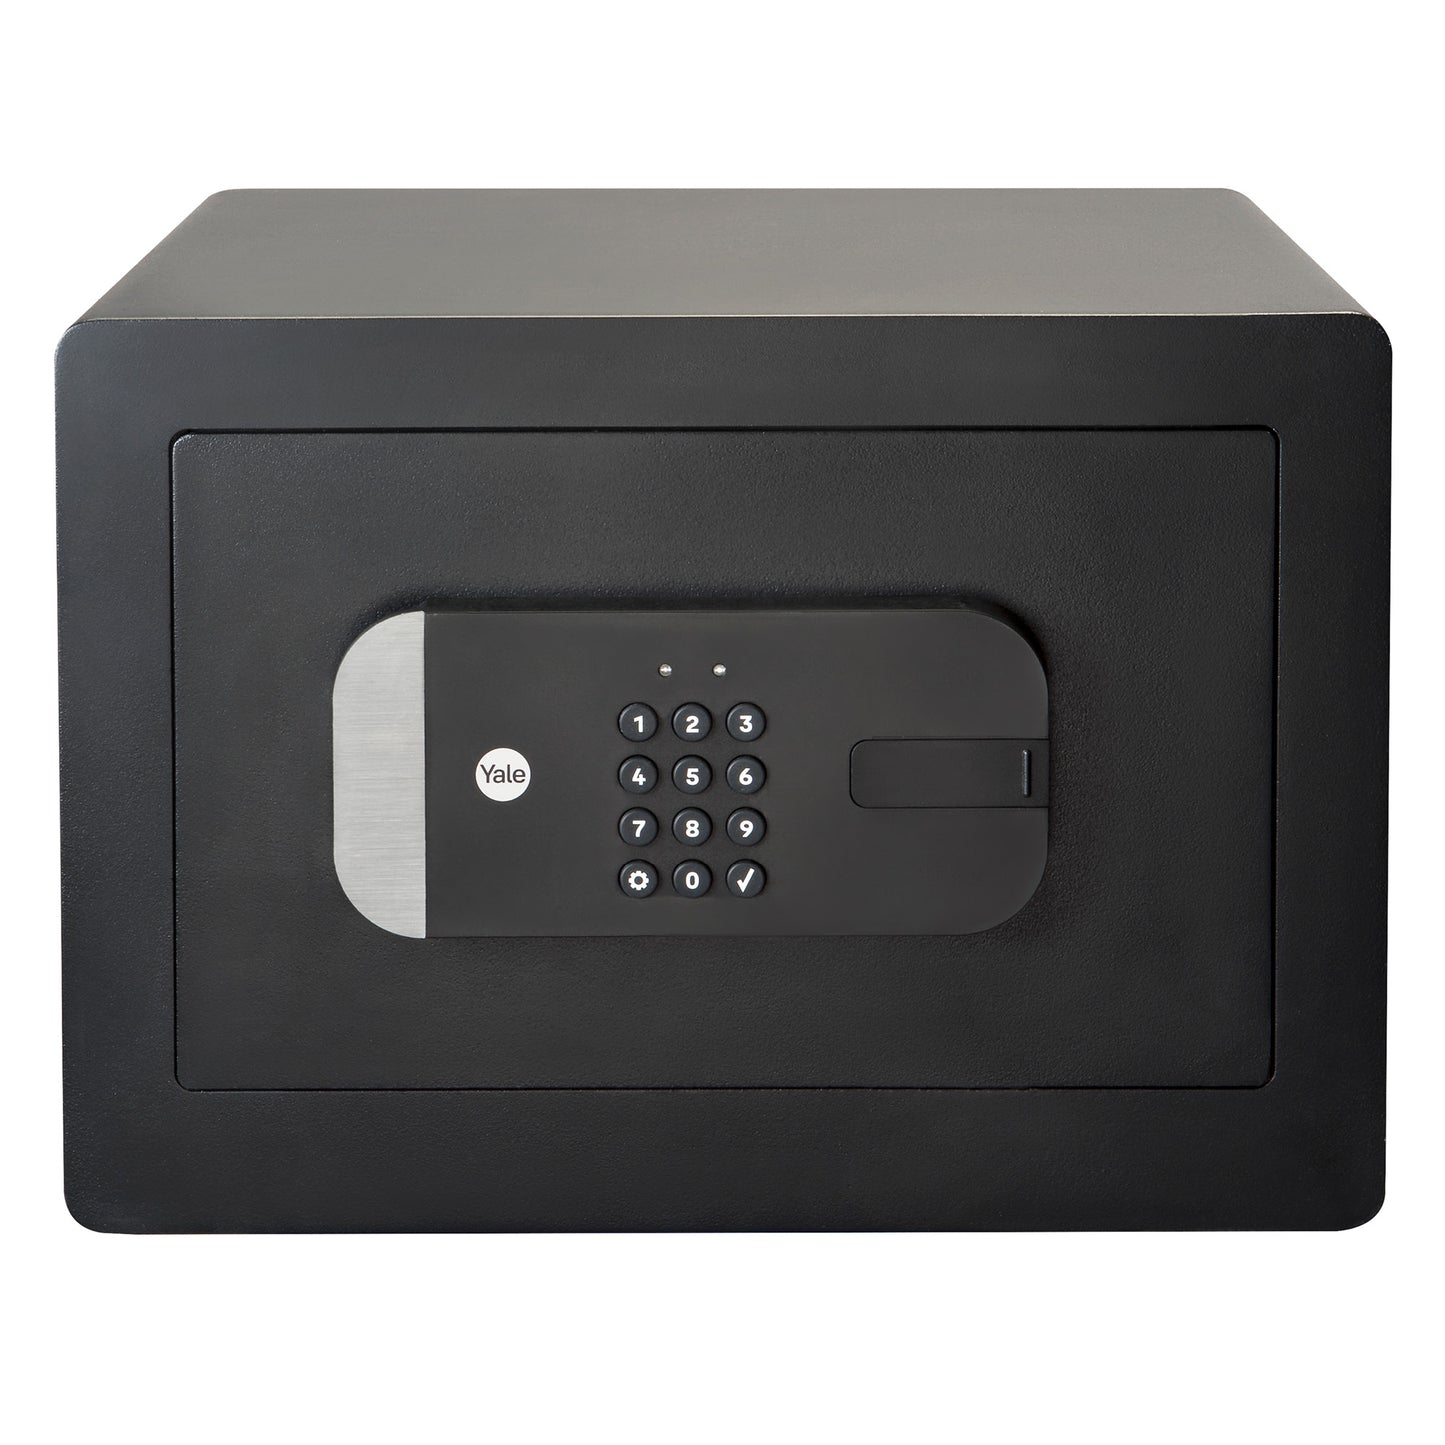 YSS/250/EB1 Smart Digital Safe Locker-Home, PIN, Black, Mobile APP